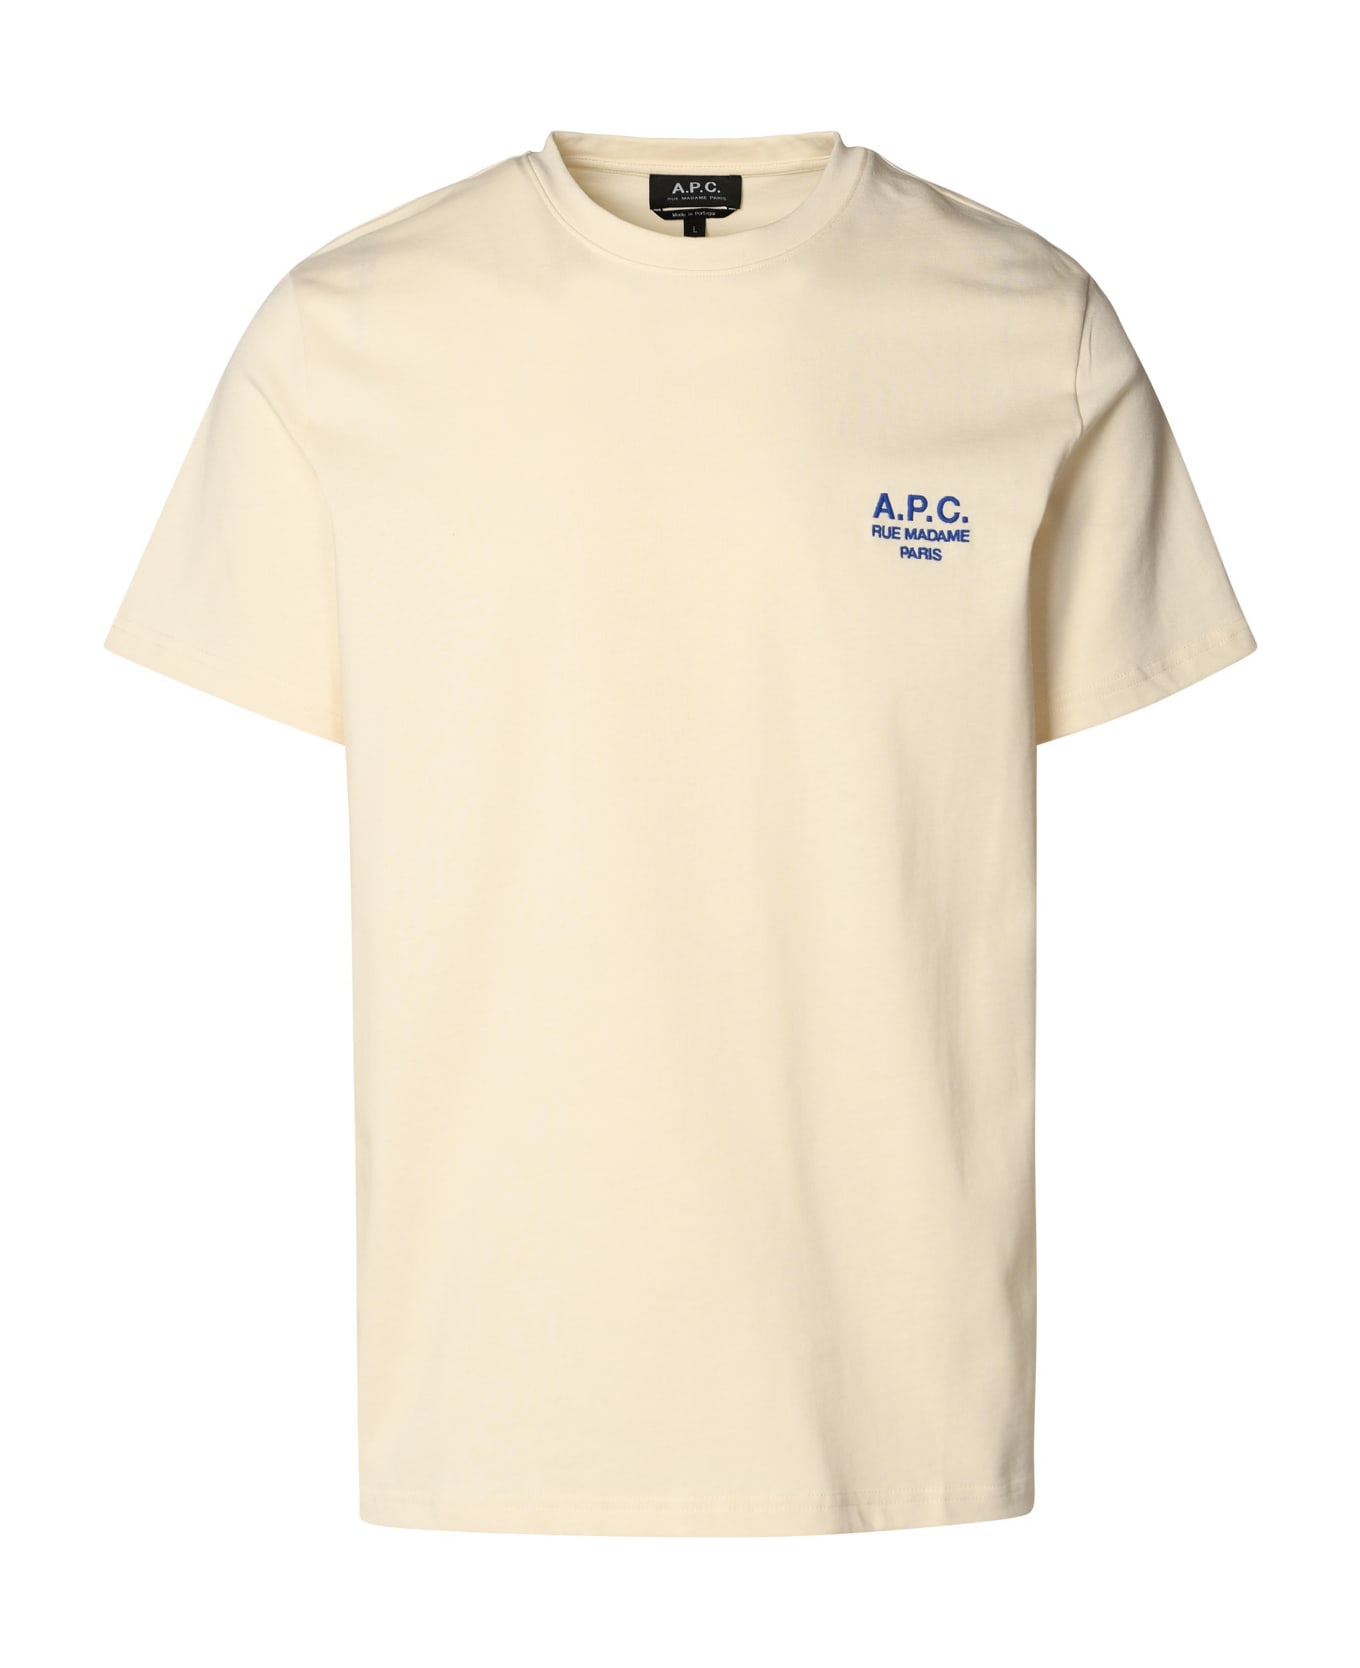 A.P.C. Logo Printed Crewneck T-shirt - Taj Blanc Casse Bleu